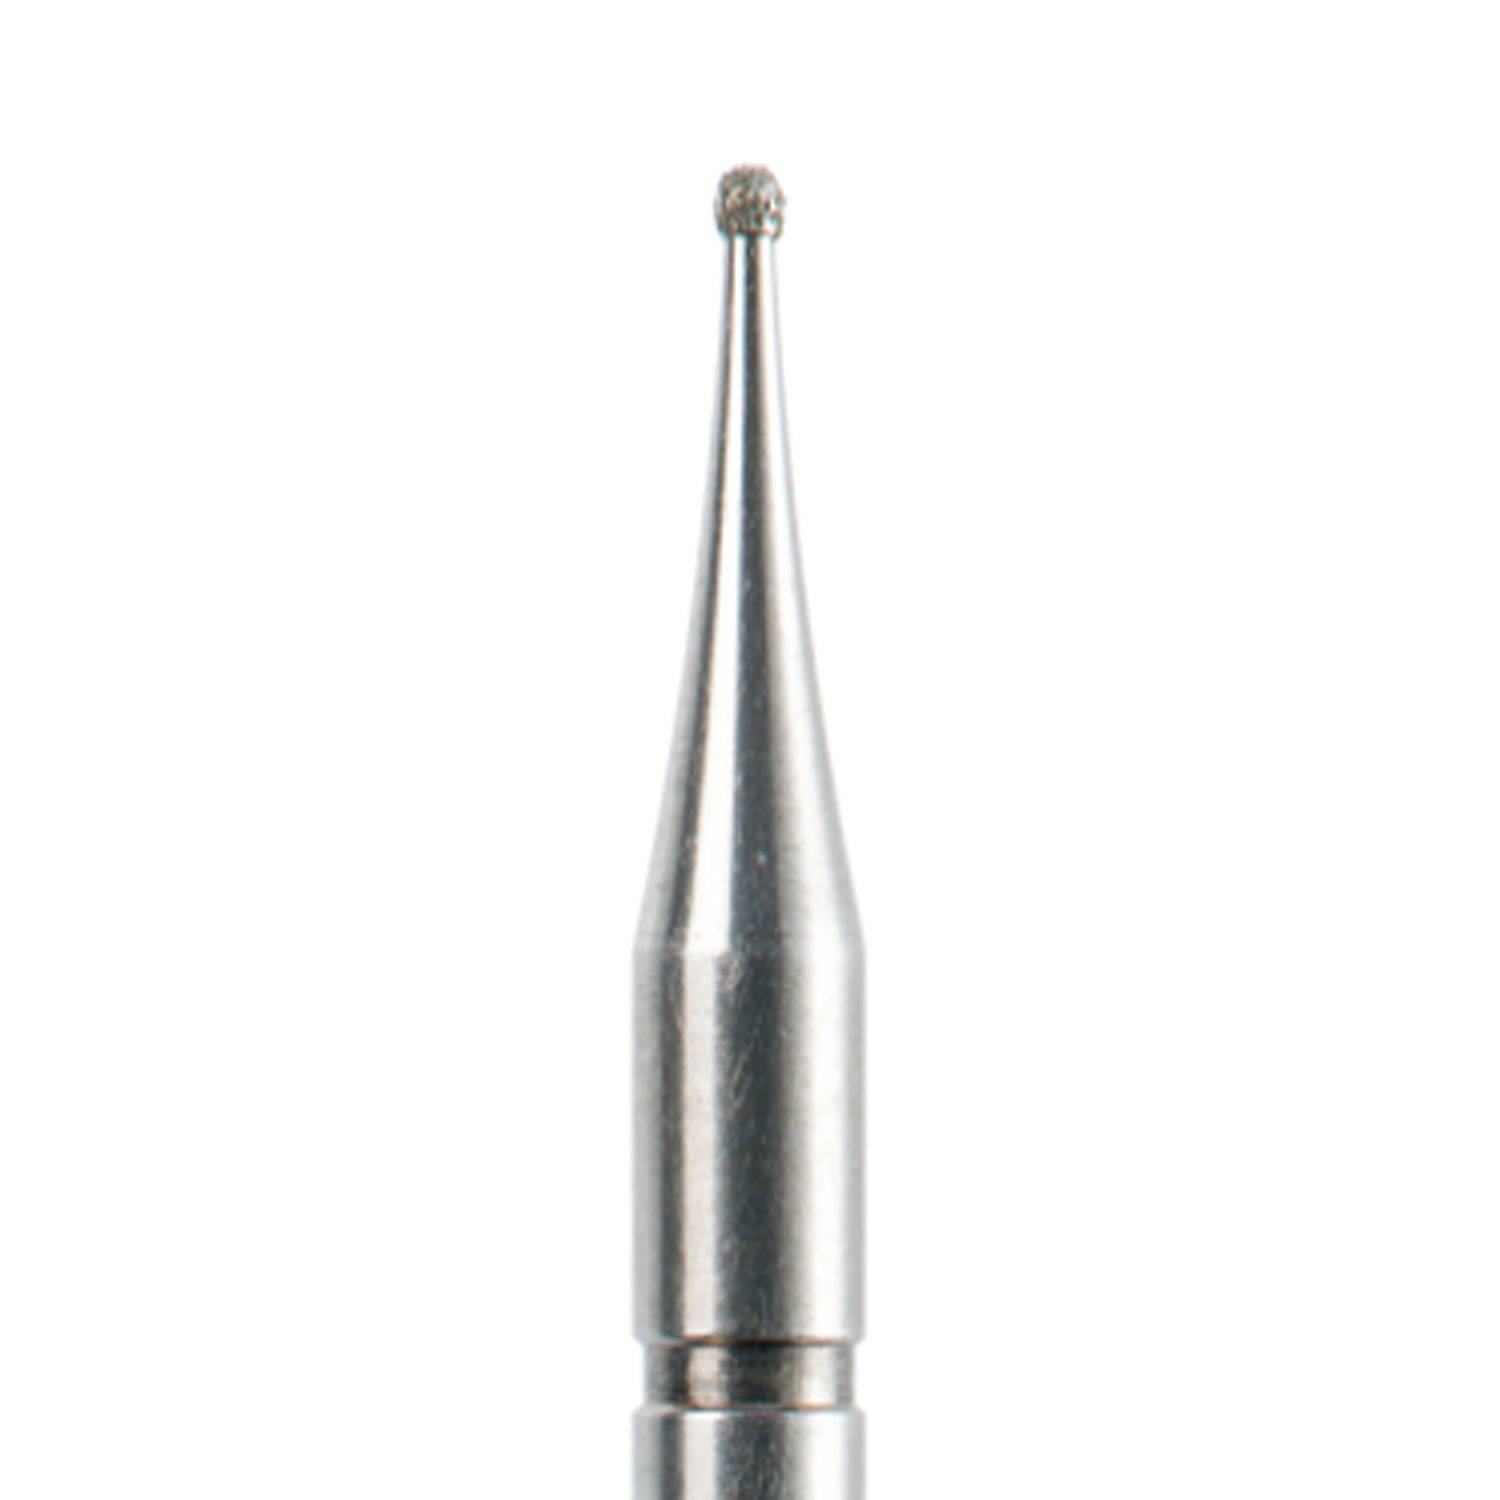 Acurata diamond instruments 524 - medium 0,9mm AC-117 ACURATA - Arrow 524 Series - Medium (Silver Ring)